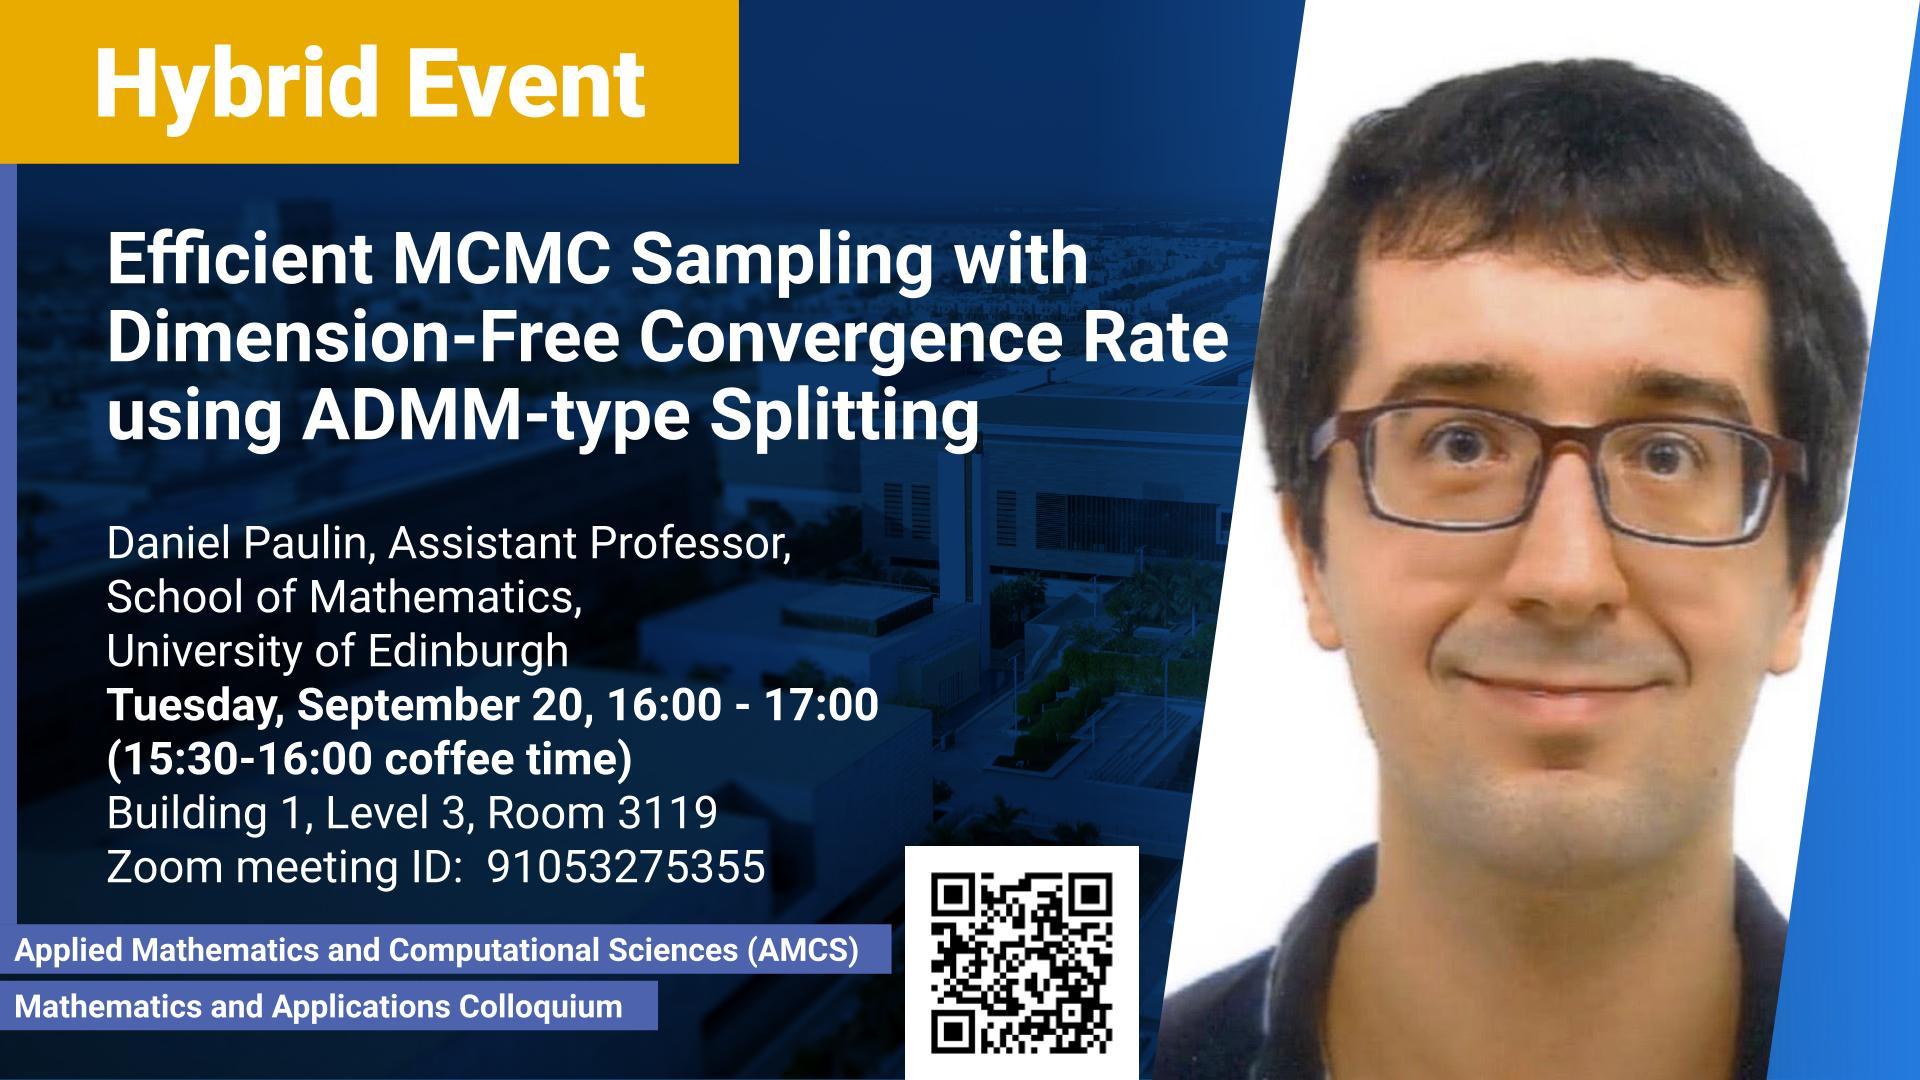 KAUST-CEMSE-AMCS Mathematics and Applications ColloquiumSeminar Danniel Paulin Efficient MCMC Sampling Dimension Free Convergence